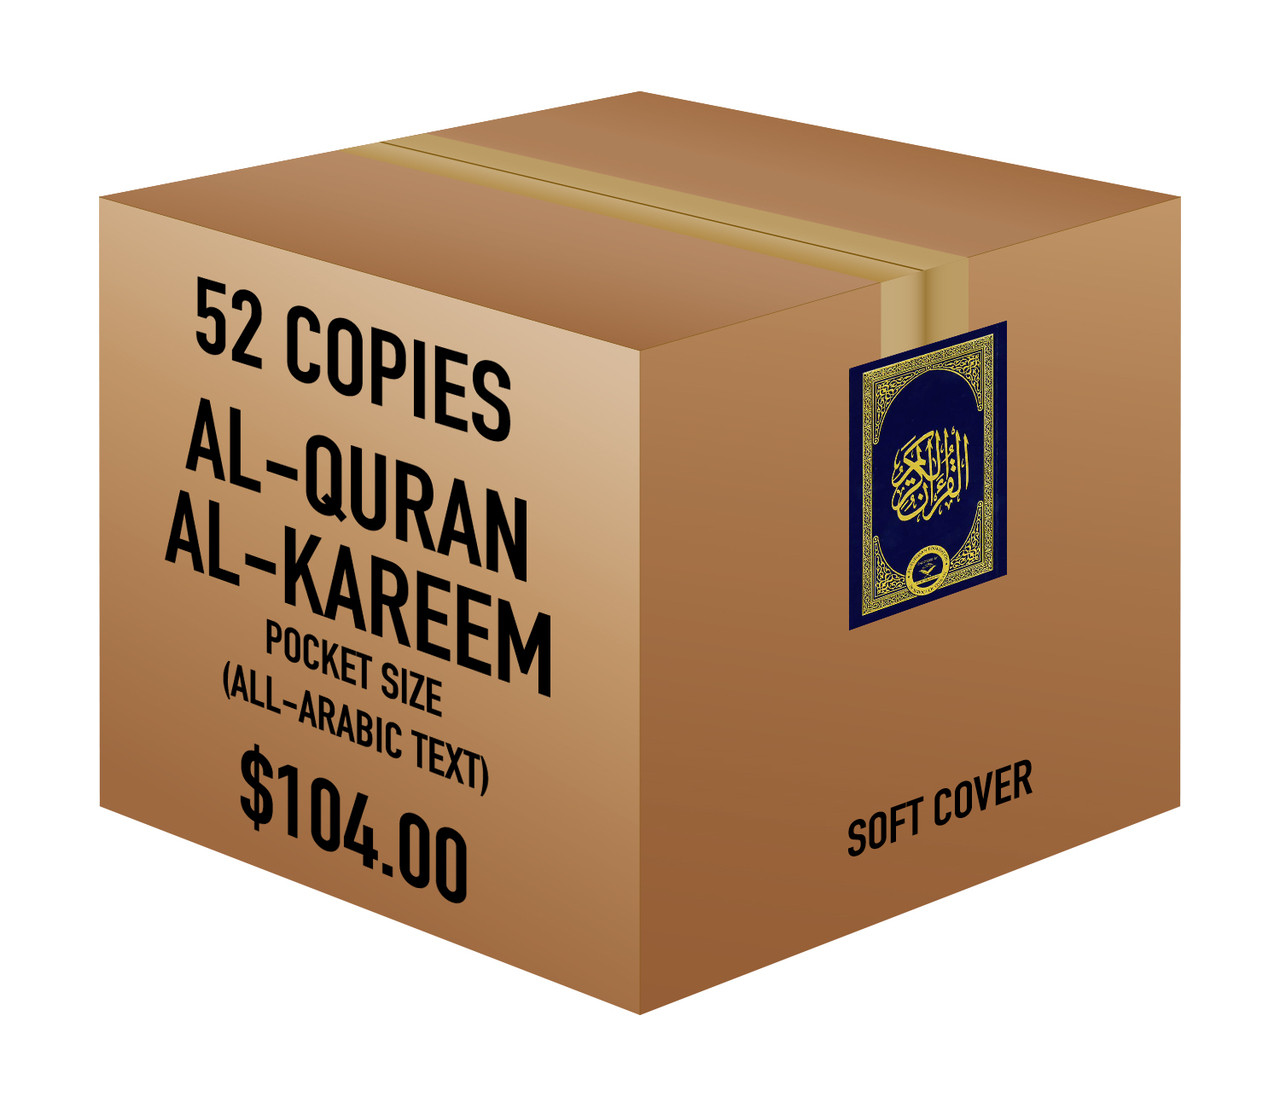 AL-QUR'AN AL-KAREEM (ALL-ARABIC SOFT COVER) - POCKET SIZE | 52 COPIES BULK